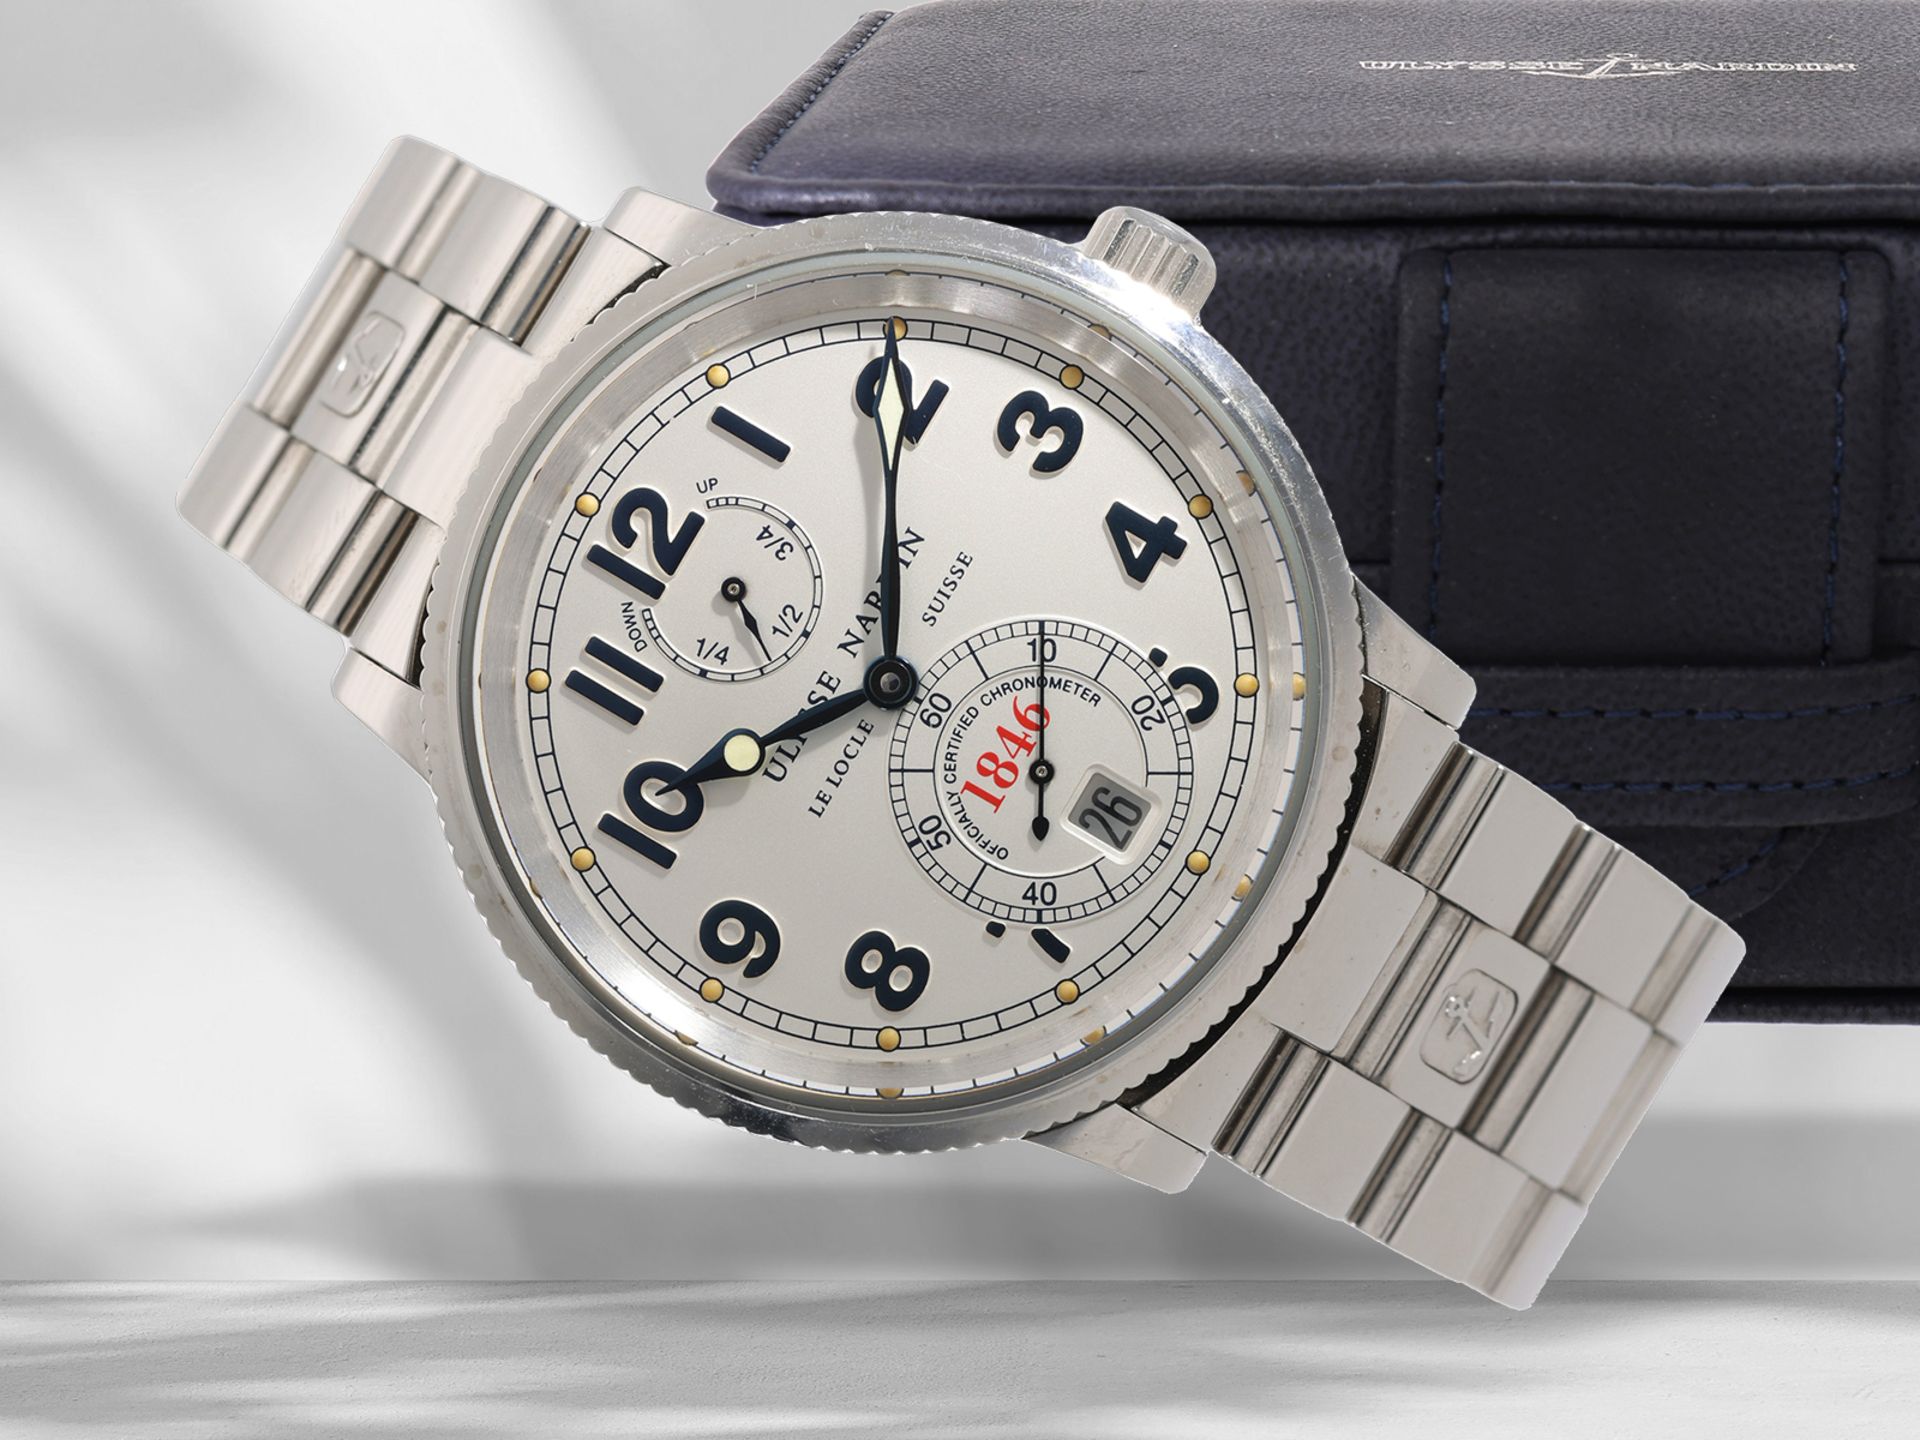 Wristwatch: Ulysse Nardin marine chronometer "1846" with original box and warranty card/accompanying